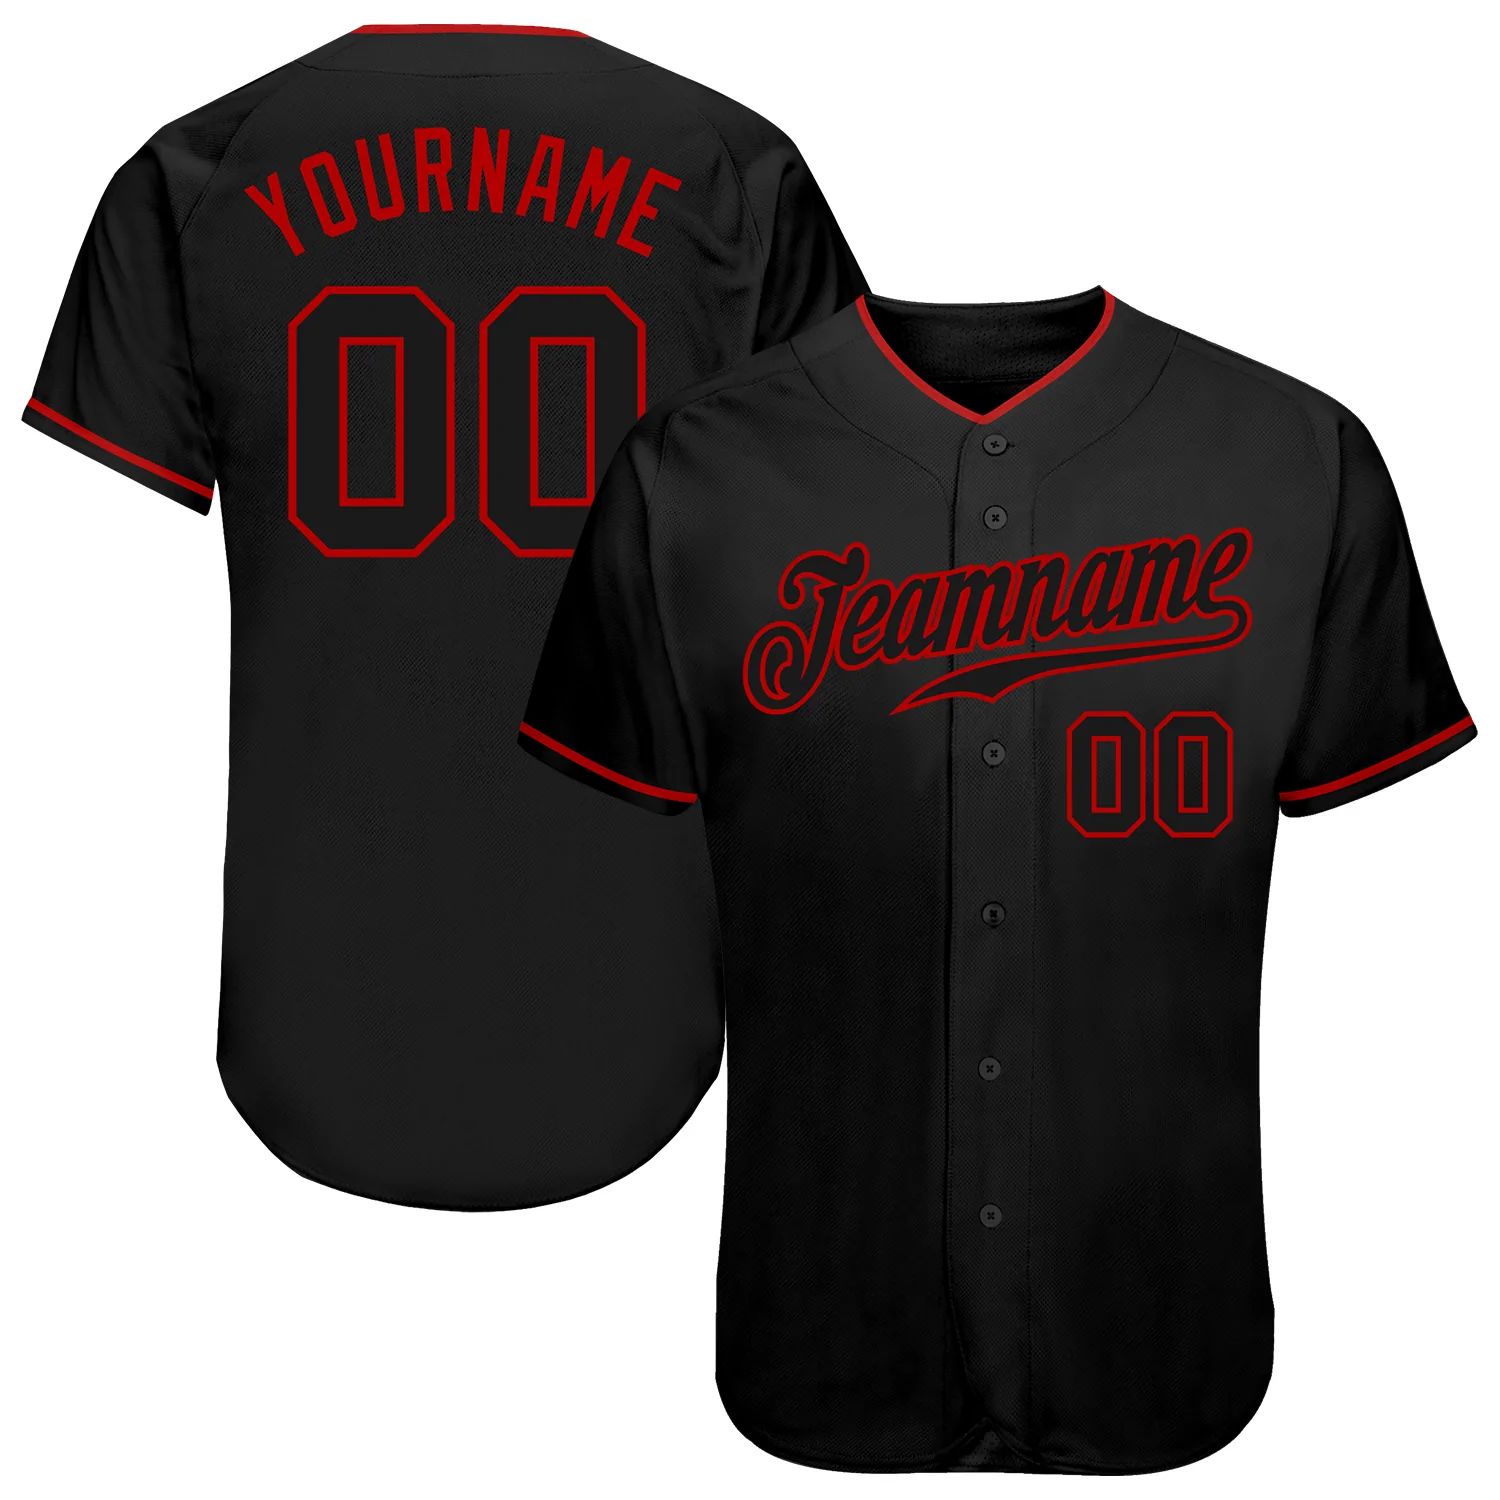 build-red-black-baseball-black-jersey-authentic-black0356-online-1.jpg